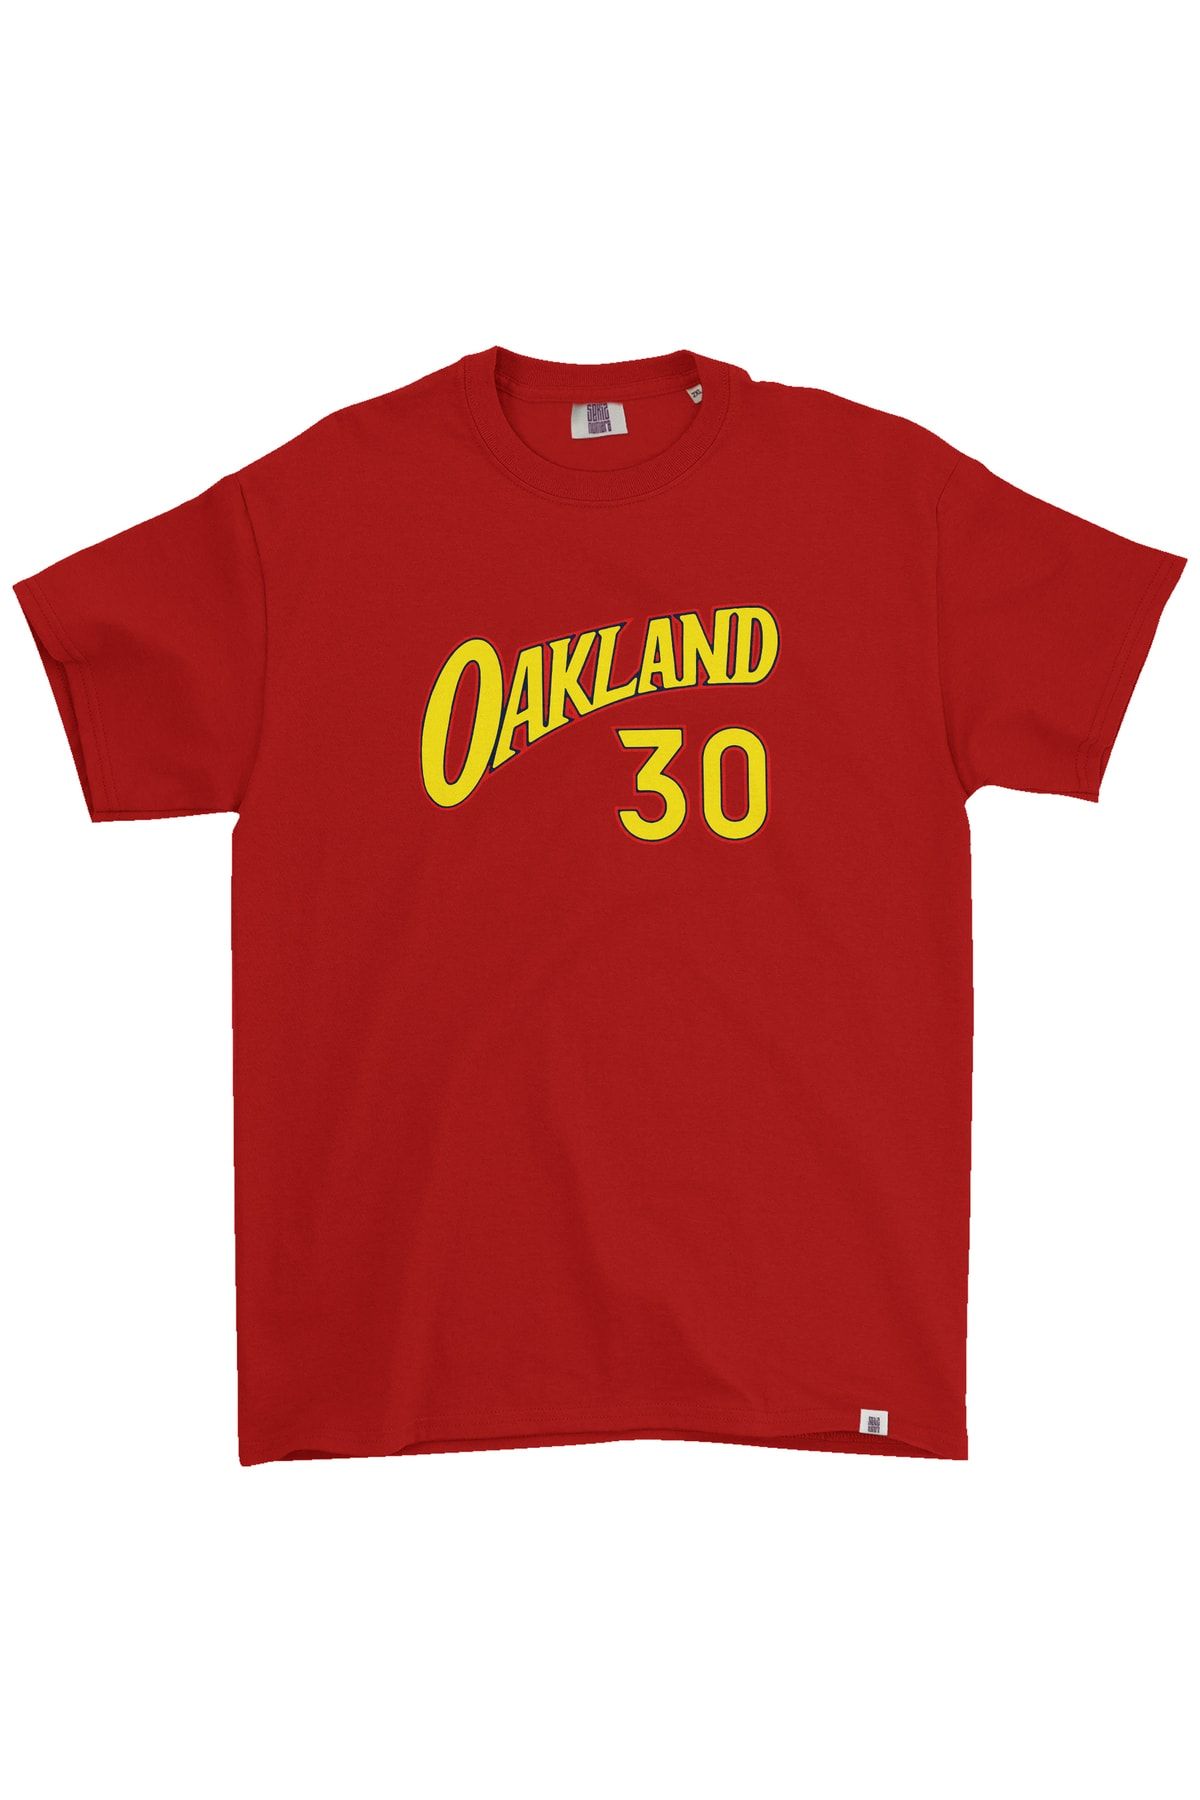 Sekiz Numara Stephen Curry Oakland 30 T-Shirt